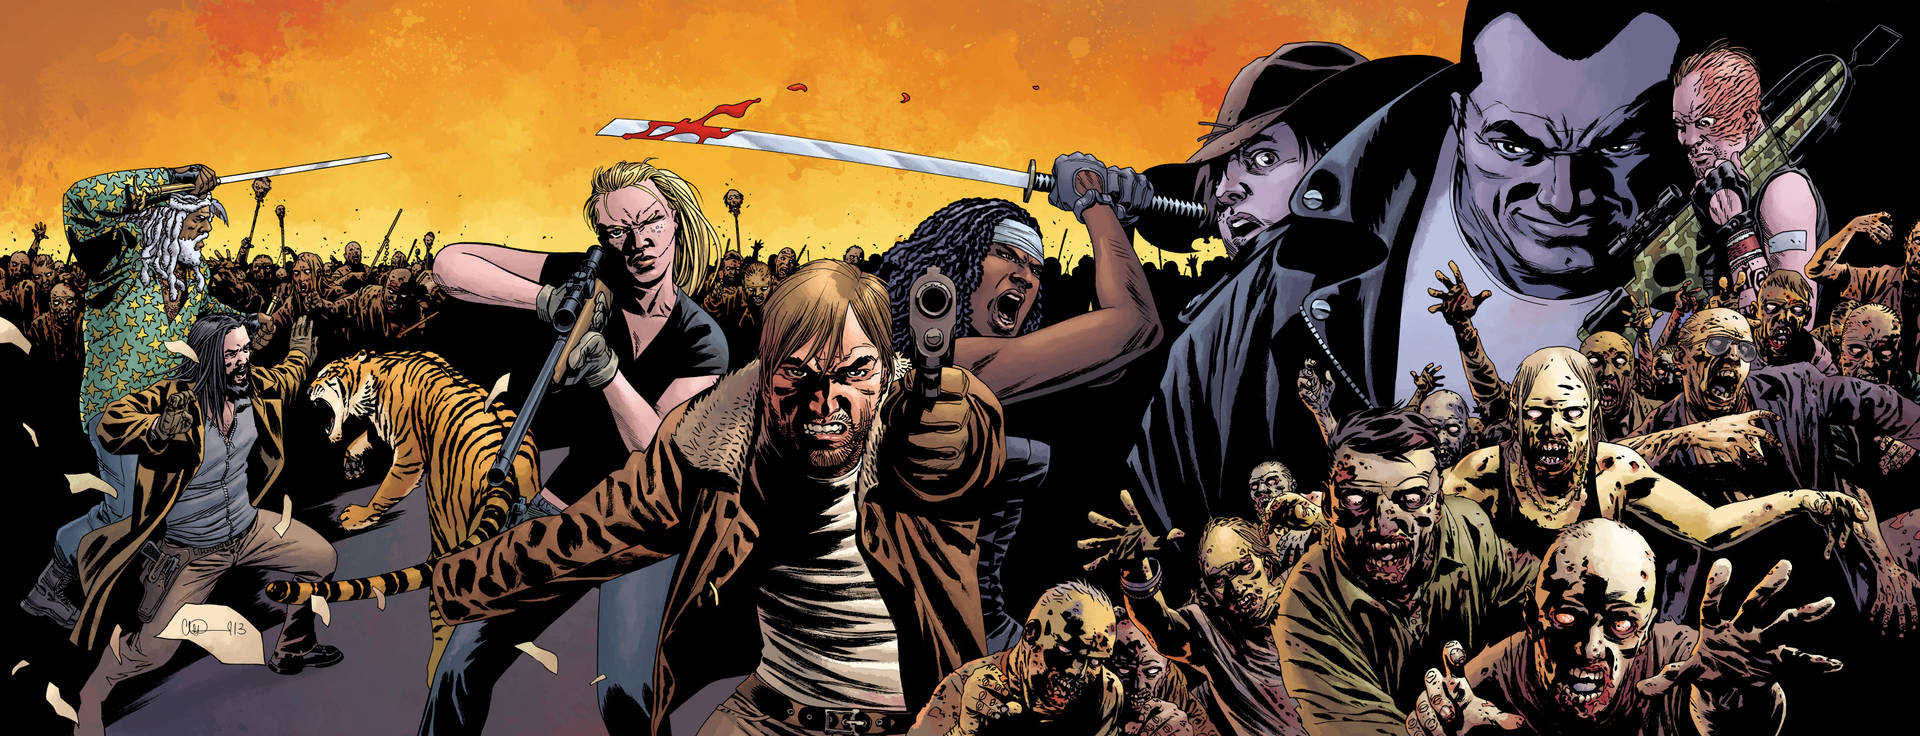 Negan From The Walking Dead Comics Wallpaper